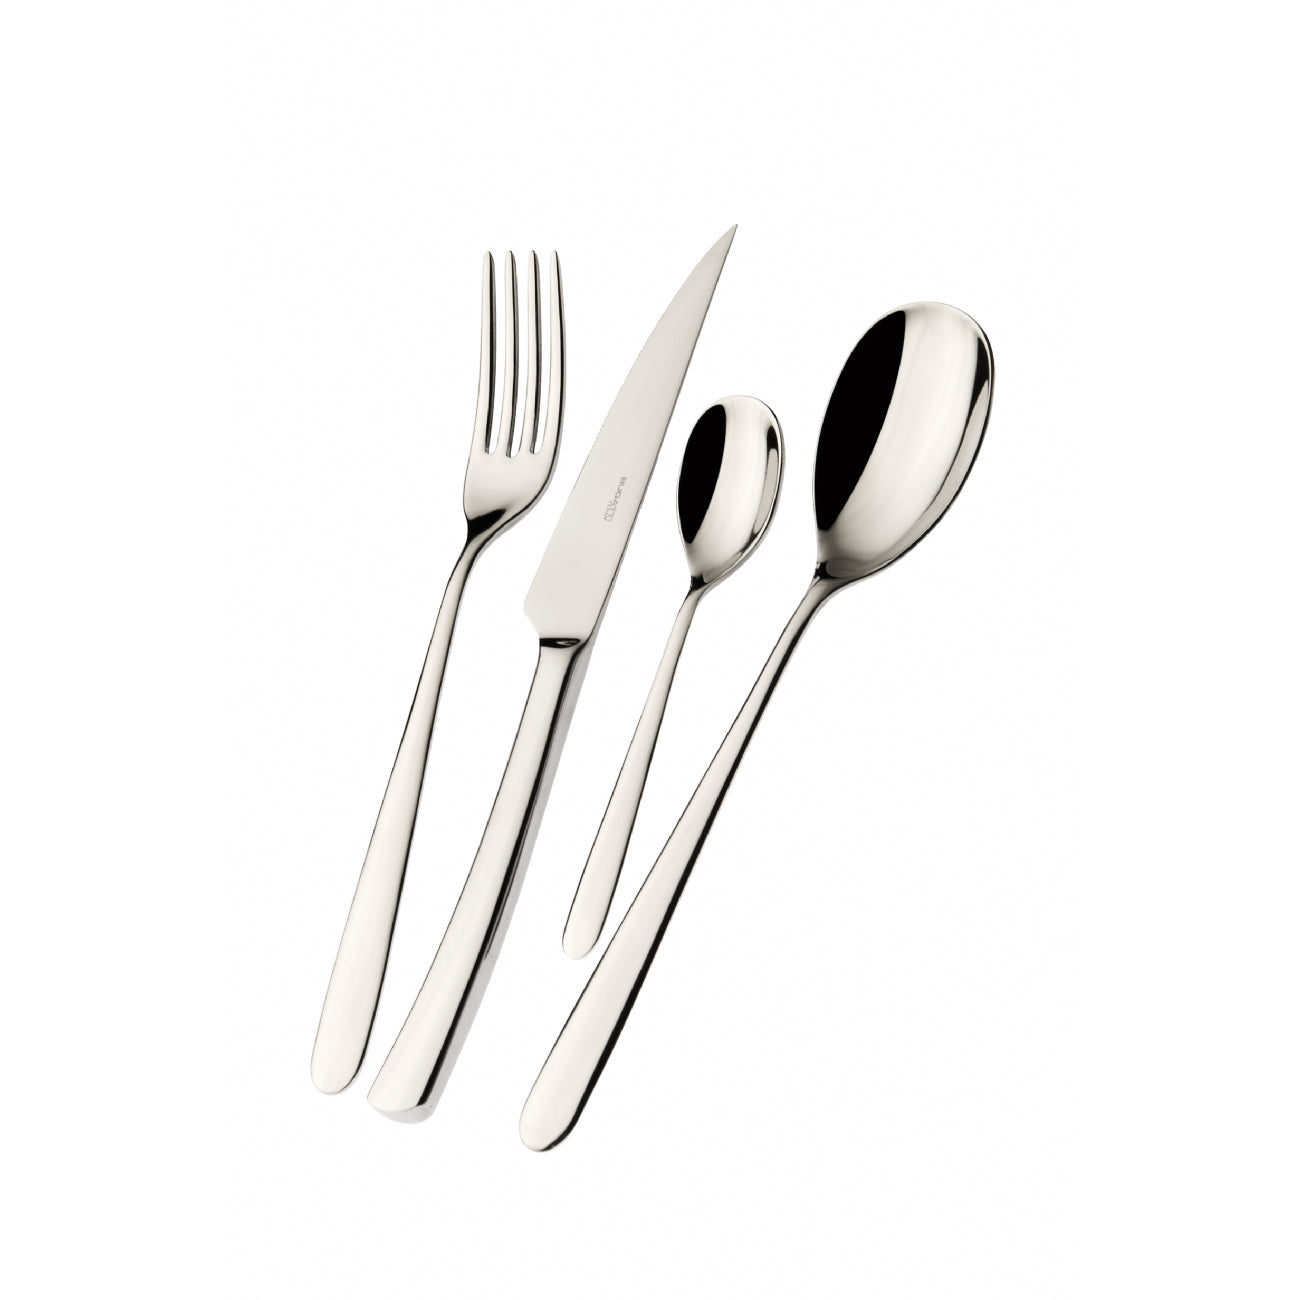 BUGATTI, Preludio, 75-piece cutlery set in 18/10 stainless steel